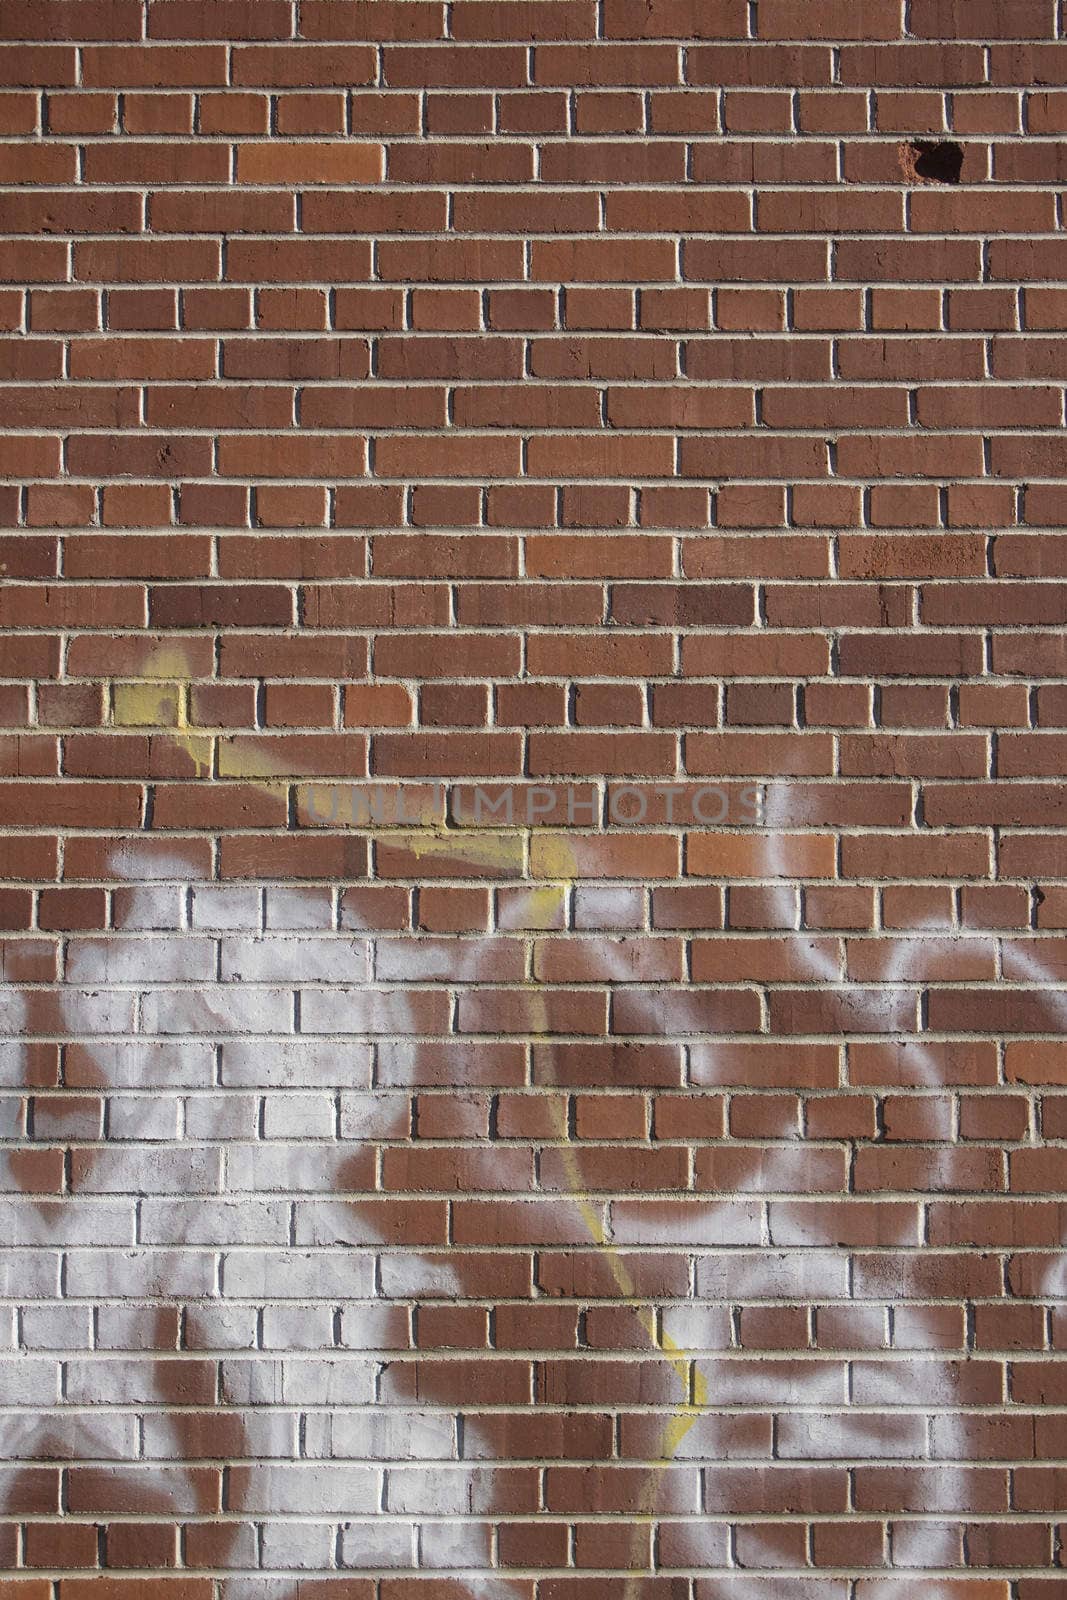 an old brick wall with graffiti